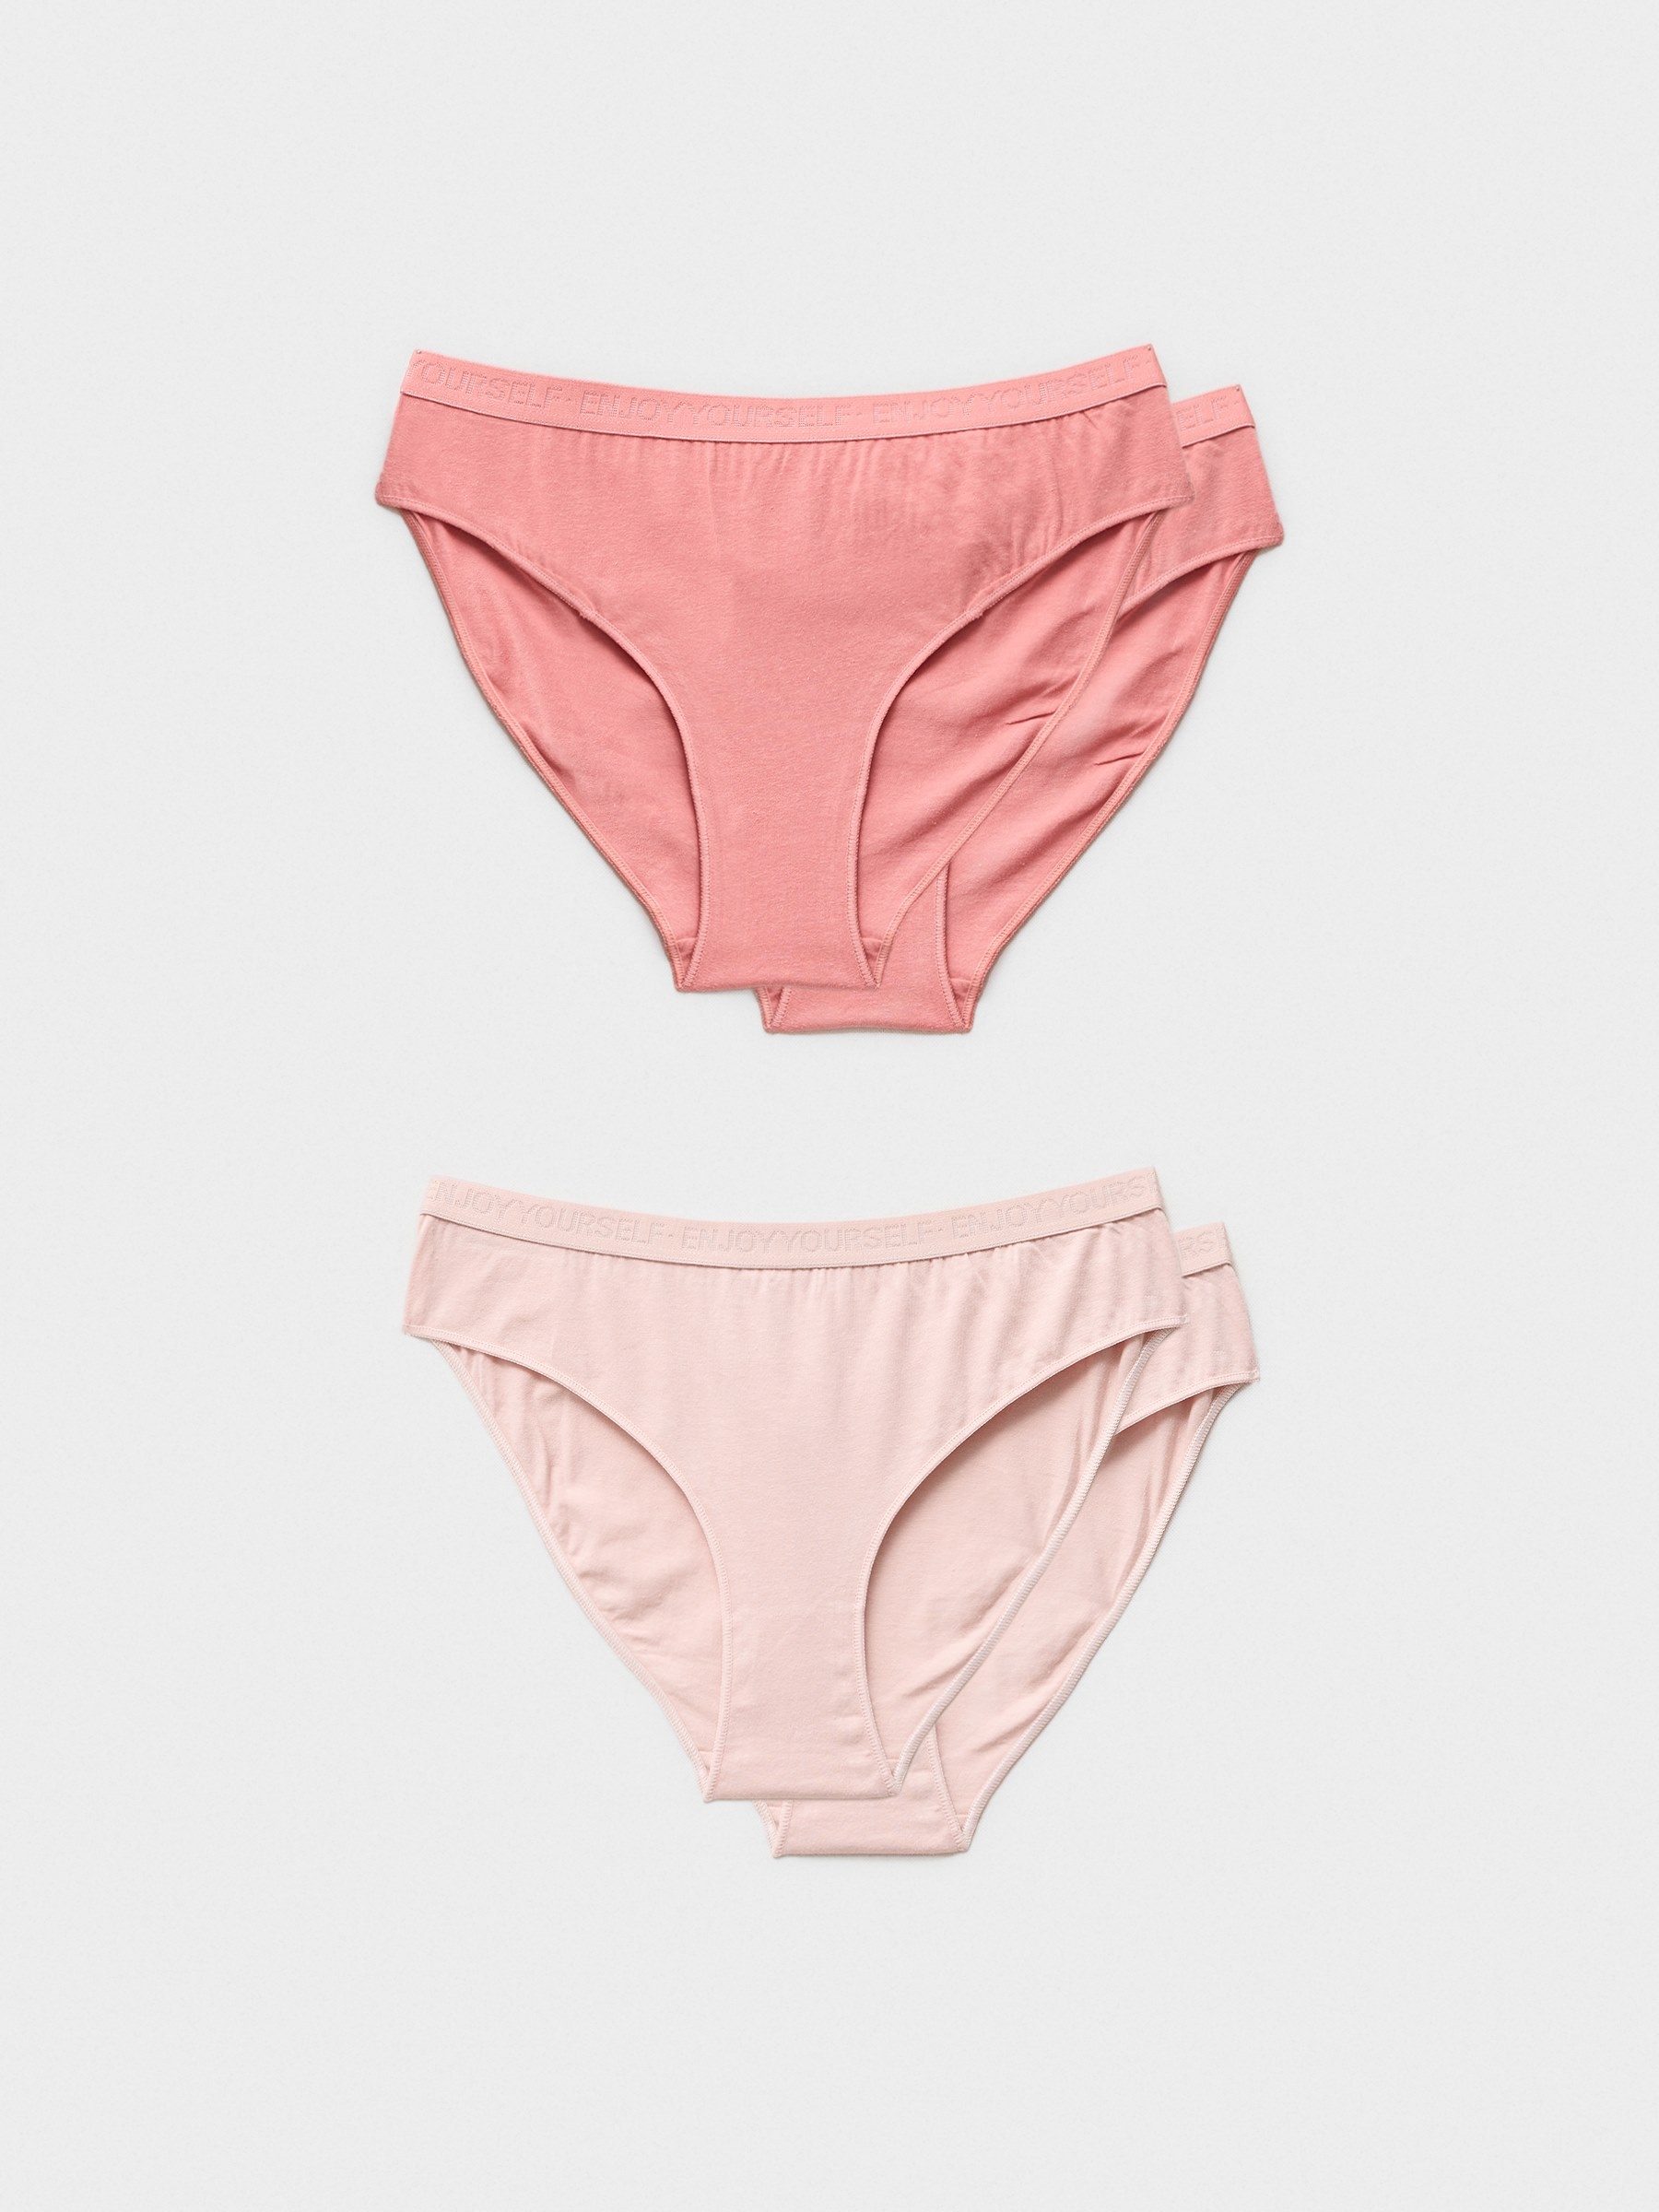 ANLINKSHINE Women's Underwear with Secret Pockets Panties, 2 - Import It All